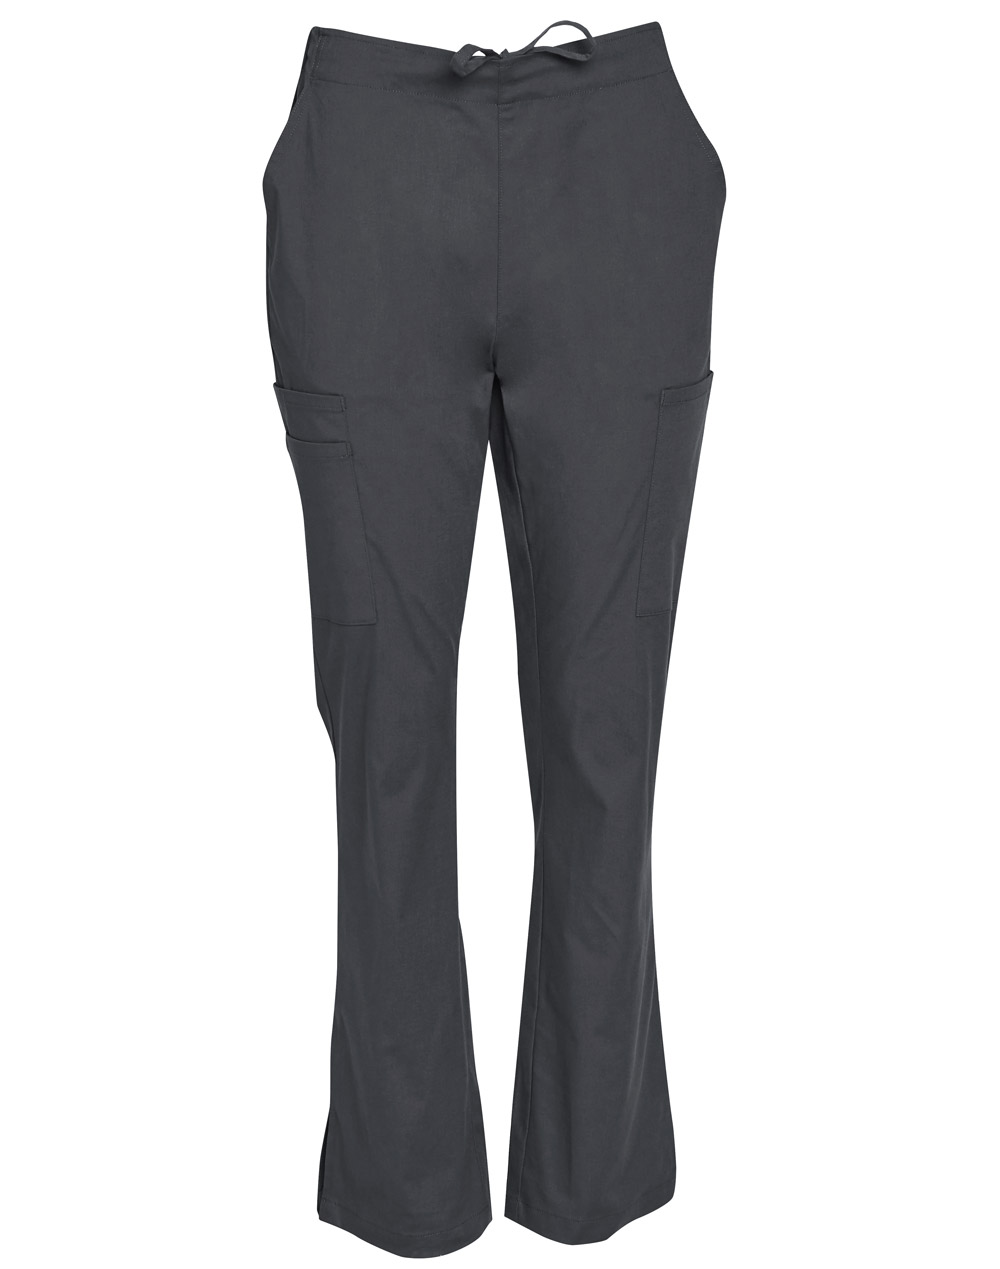 Order Online Charcoal Ladies Semi-Elastic Waist Tie Solid Colour Scrub Pants in Perth